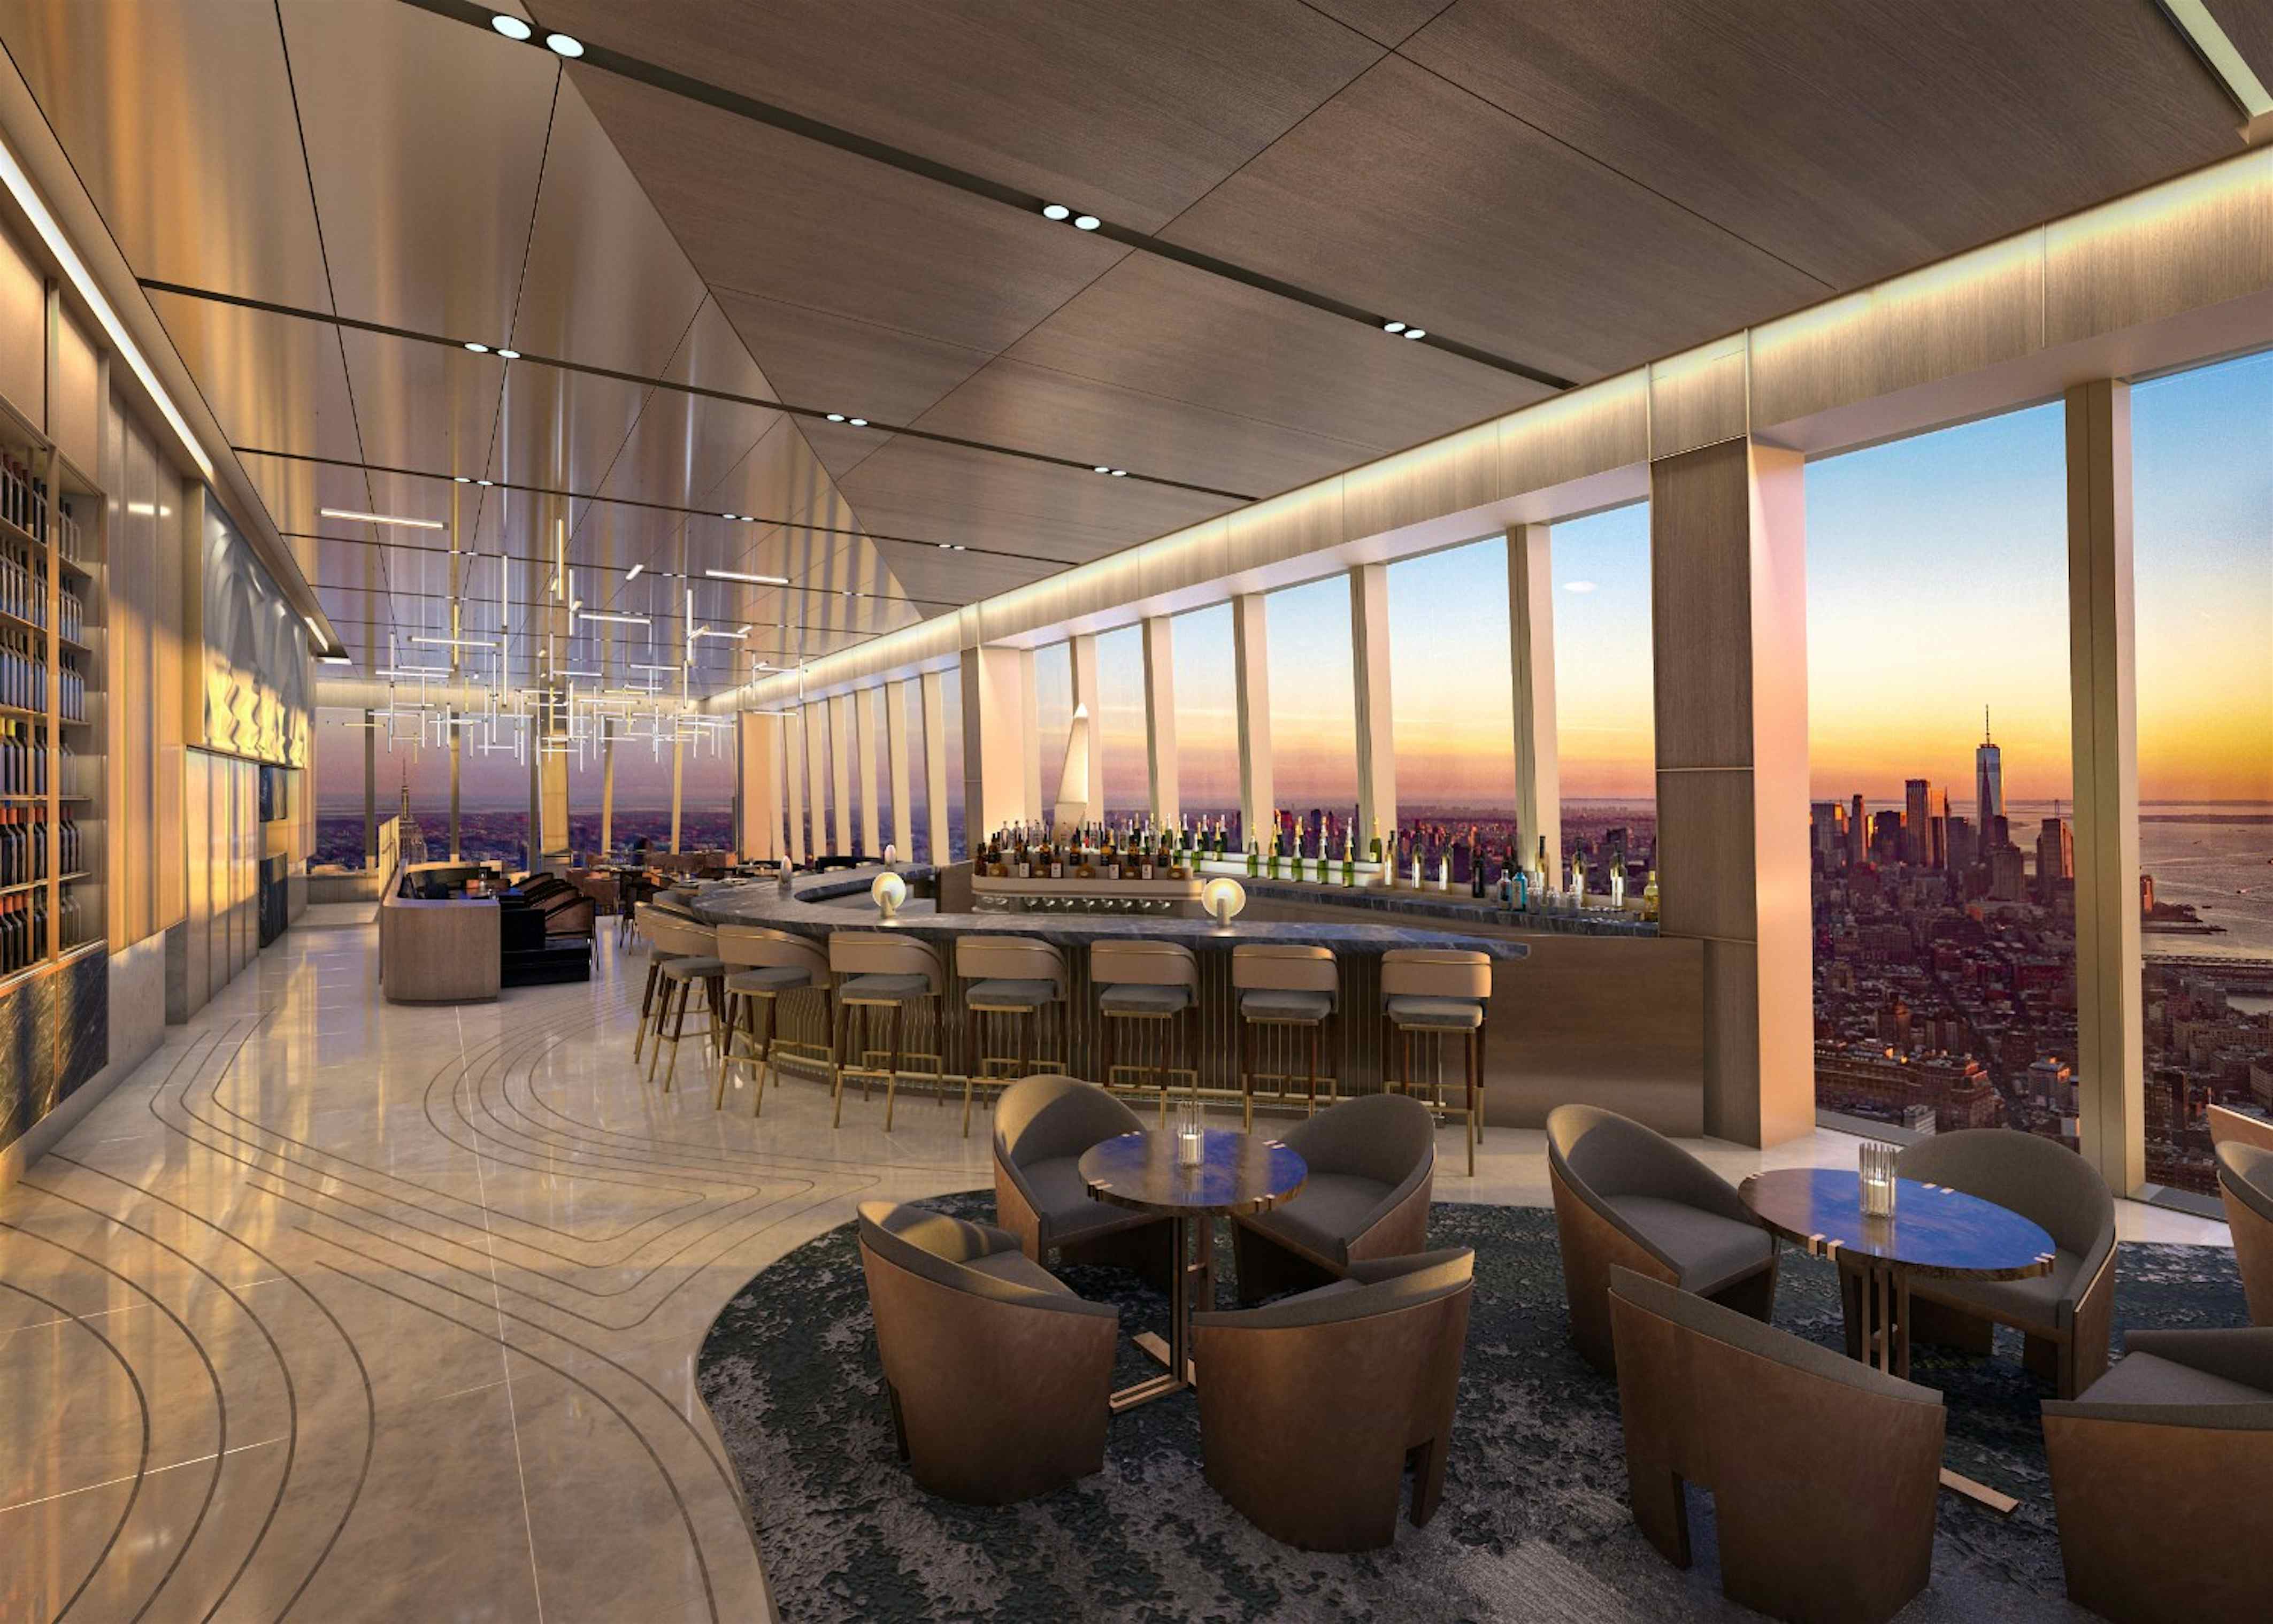 This 101stfloor restaurant will have stunning views of New York City